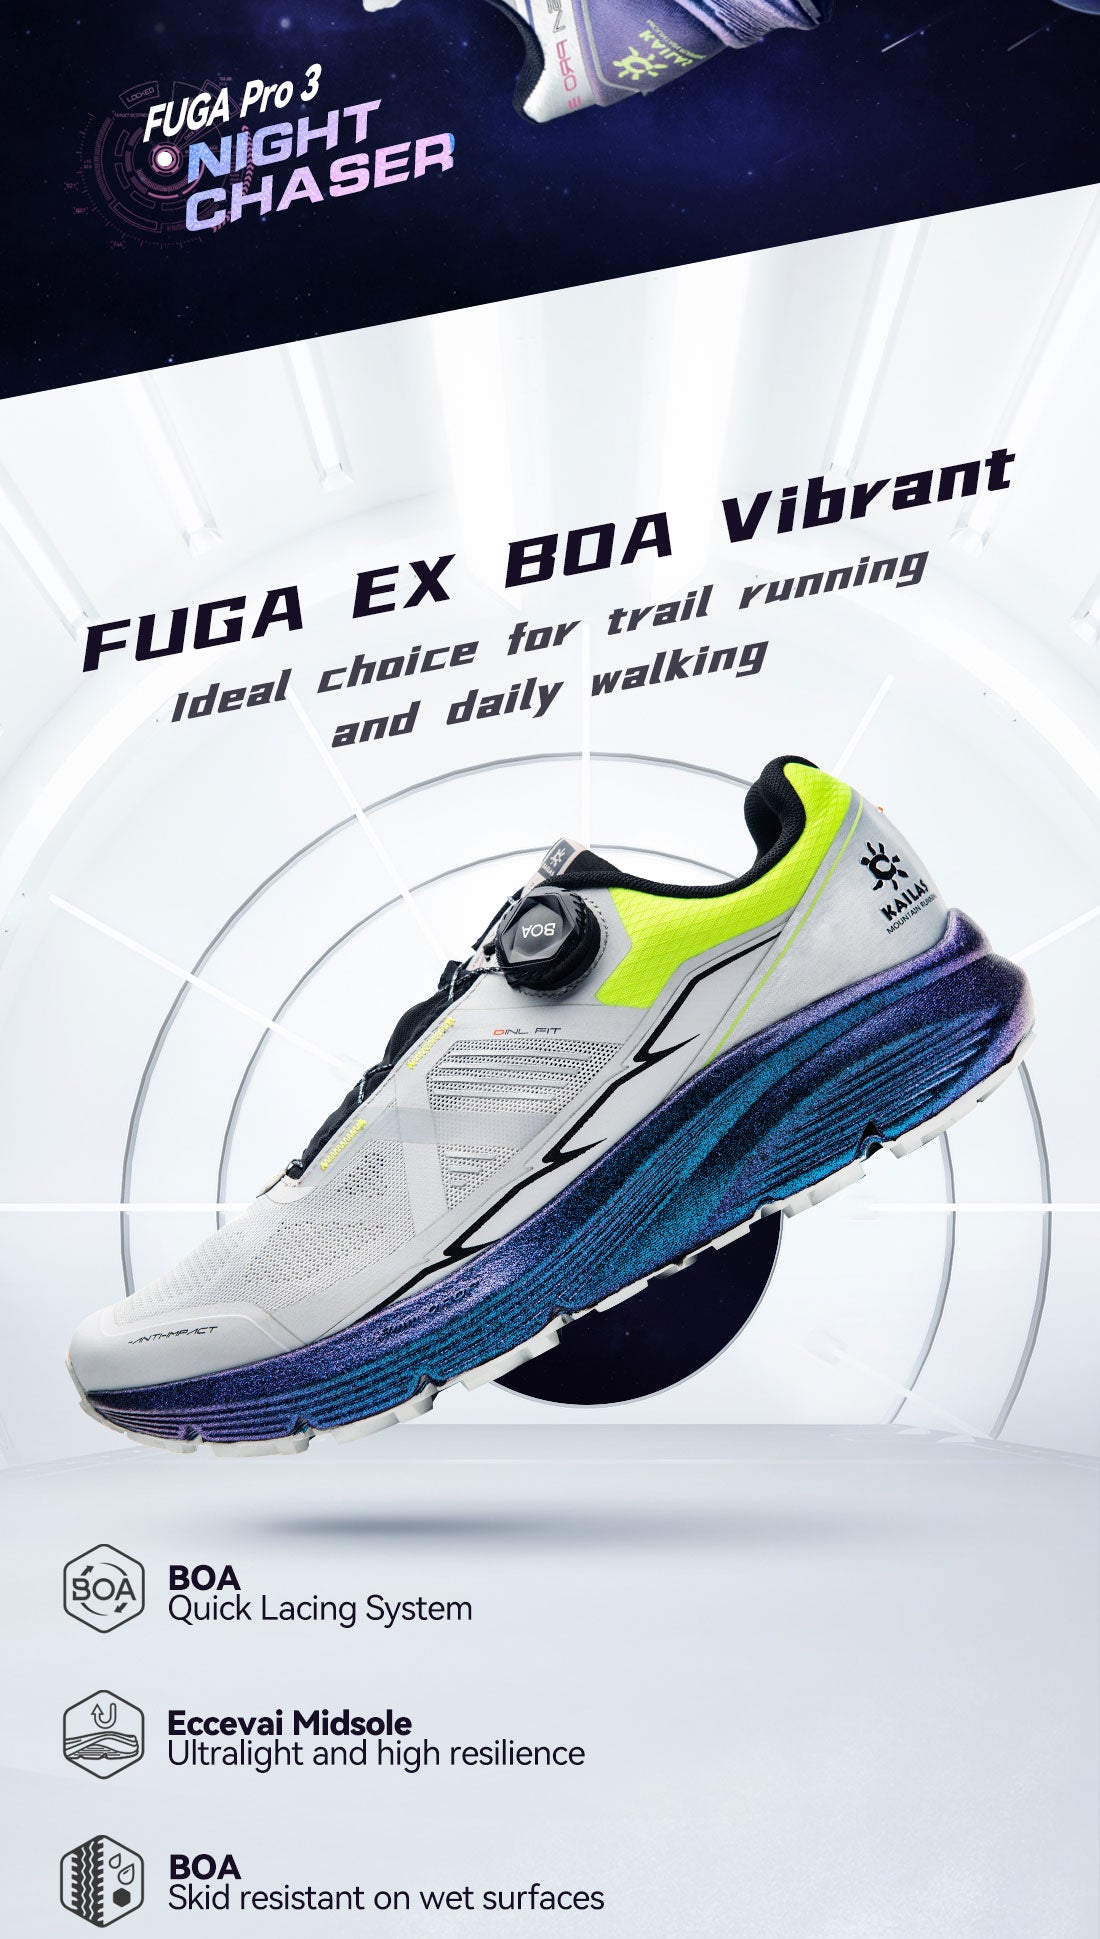 2. Nuovo colore su FUGA EX BOA e FUGA Pro 3